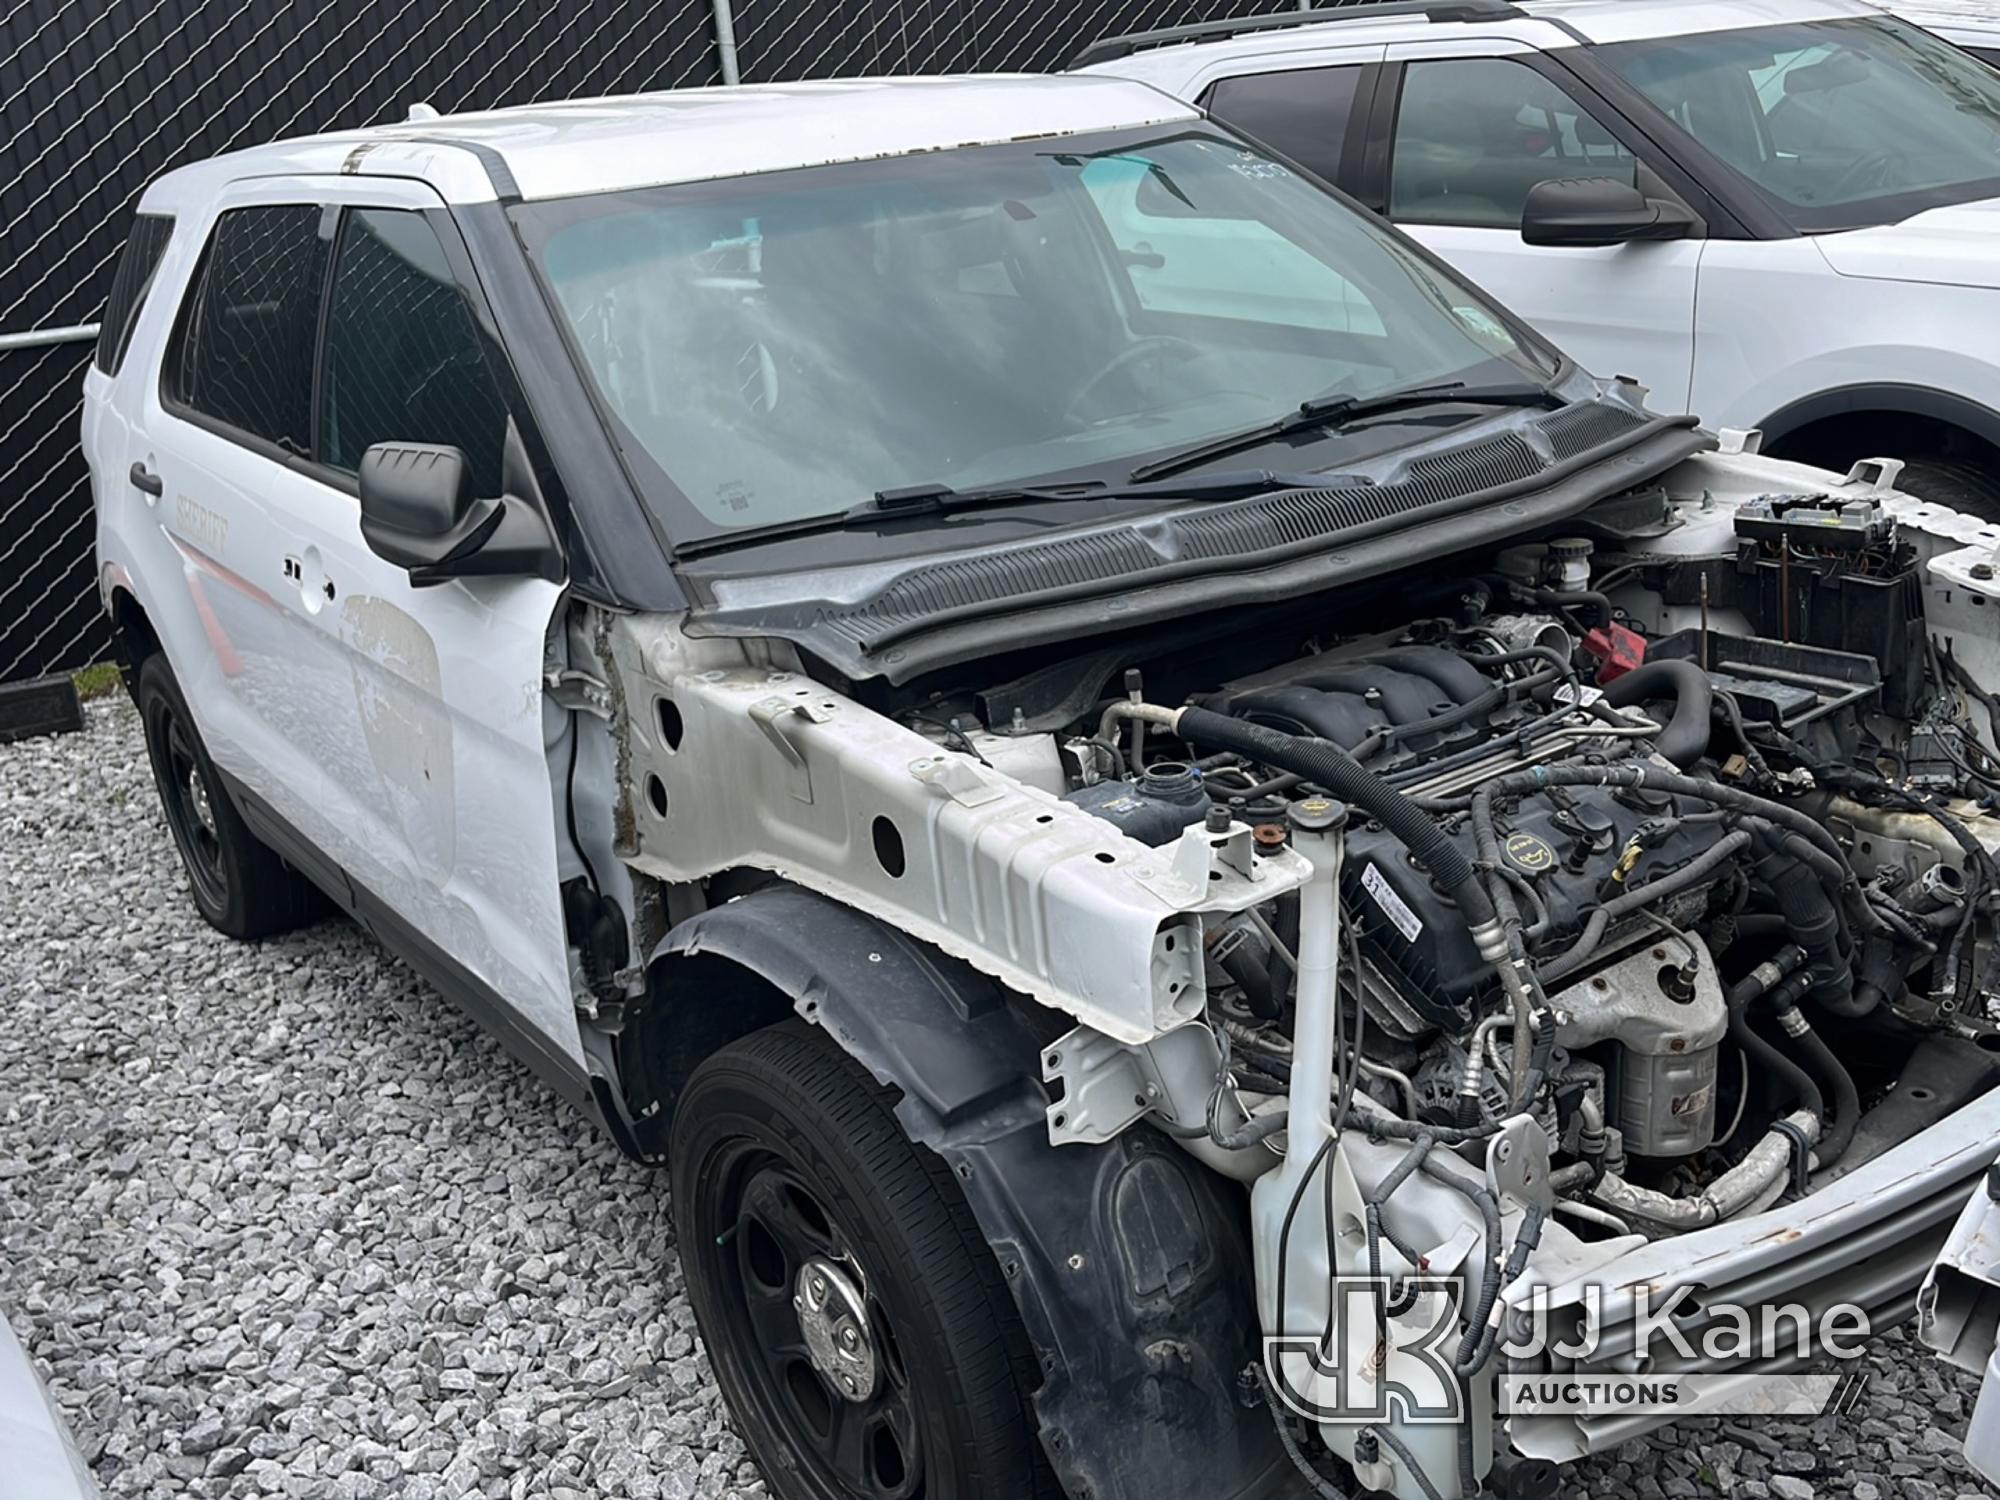 (Covington, LA) 2016 Ford Explorer AWD Police Interceptor 4-Door Sport Utility Vehicle Not Running,